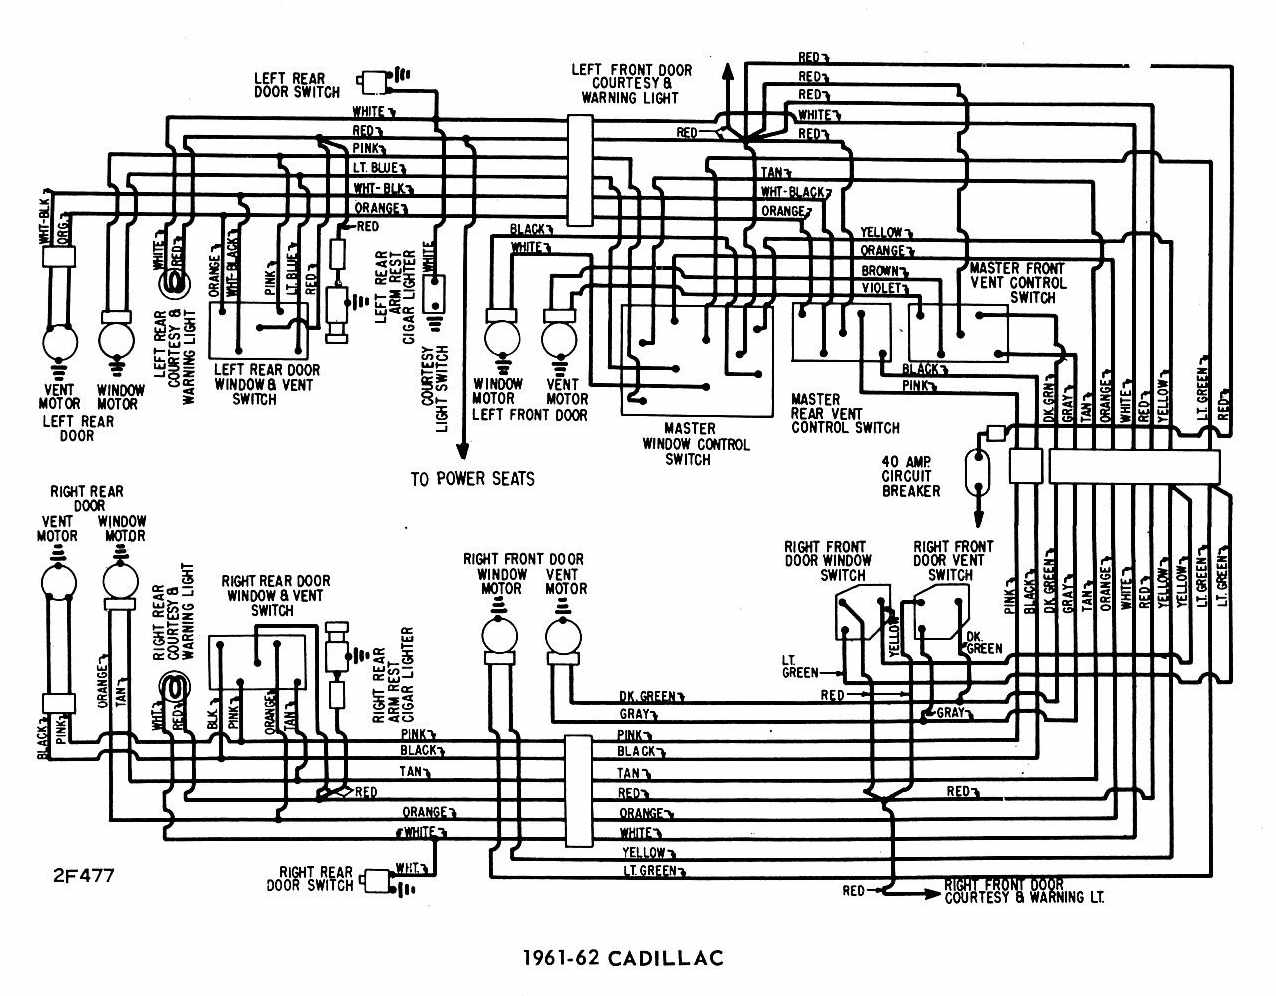 CADILLAC - Car PDF Manual, Wiring Diagram & Fault Codes DTC 02 Cadillac Escalade Stereo Wiring Diagrams automotive-manuals.net